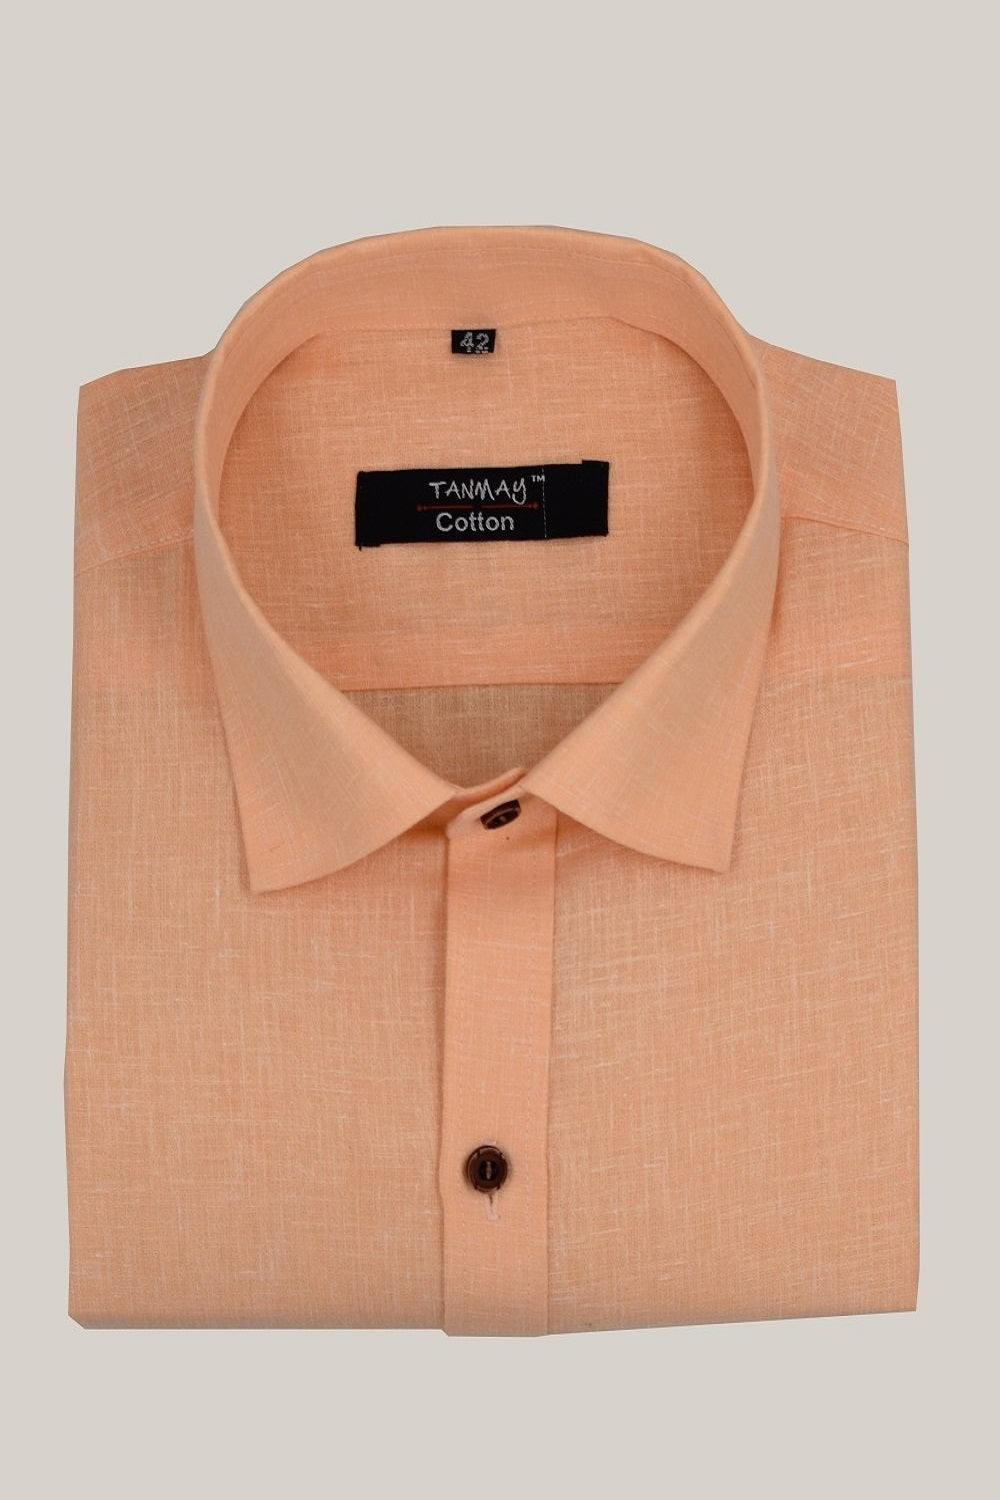 Cotton Tanmay Light Orange Color Linen Fill Formal Cotton Shirt For Men's